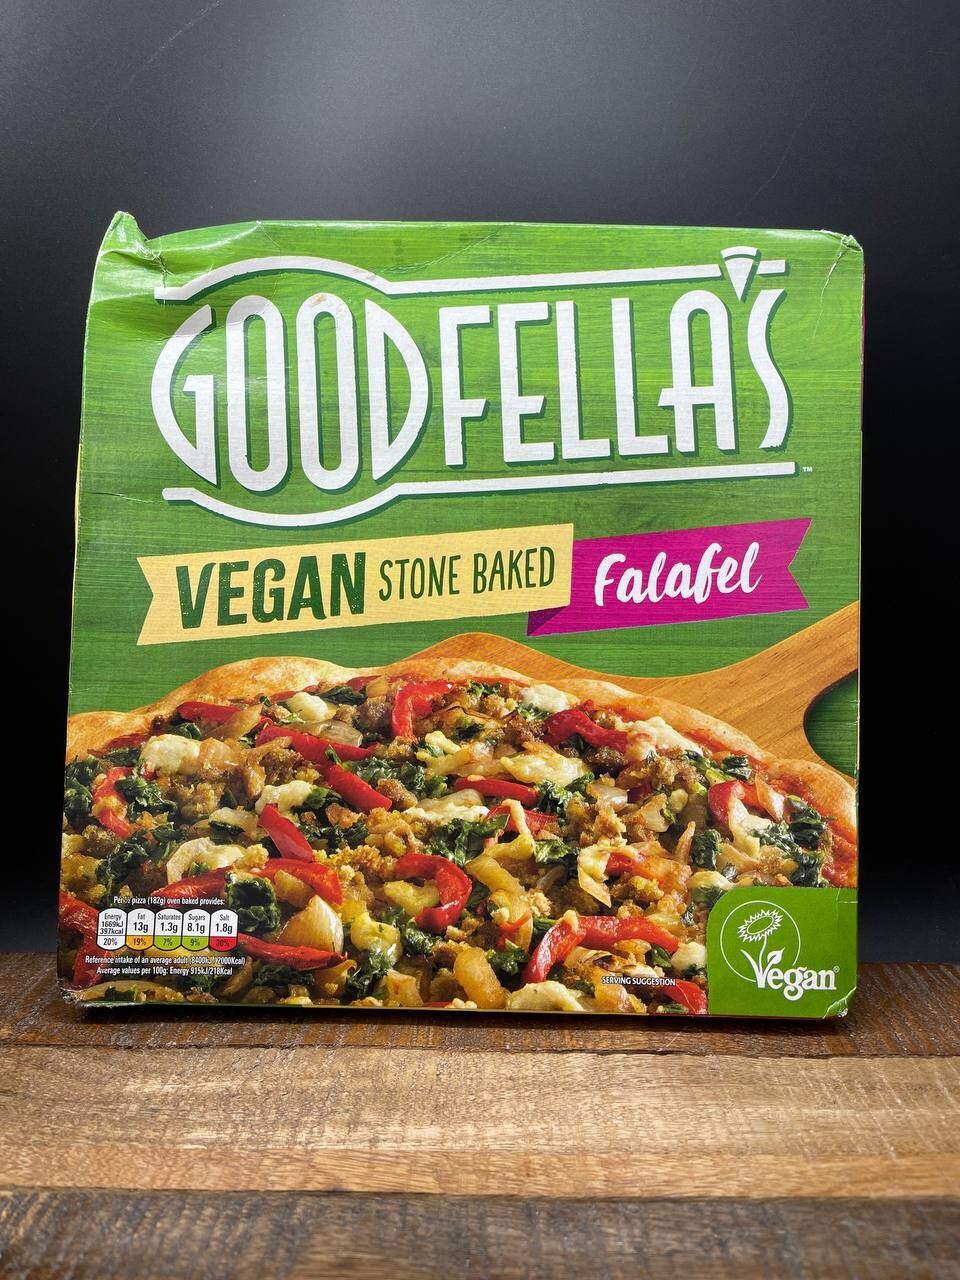 Goodfellas Vegan Stone Baked Falafel 377g